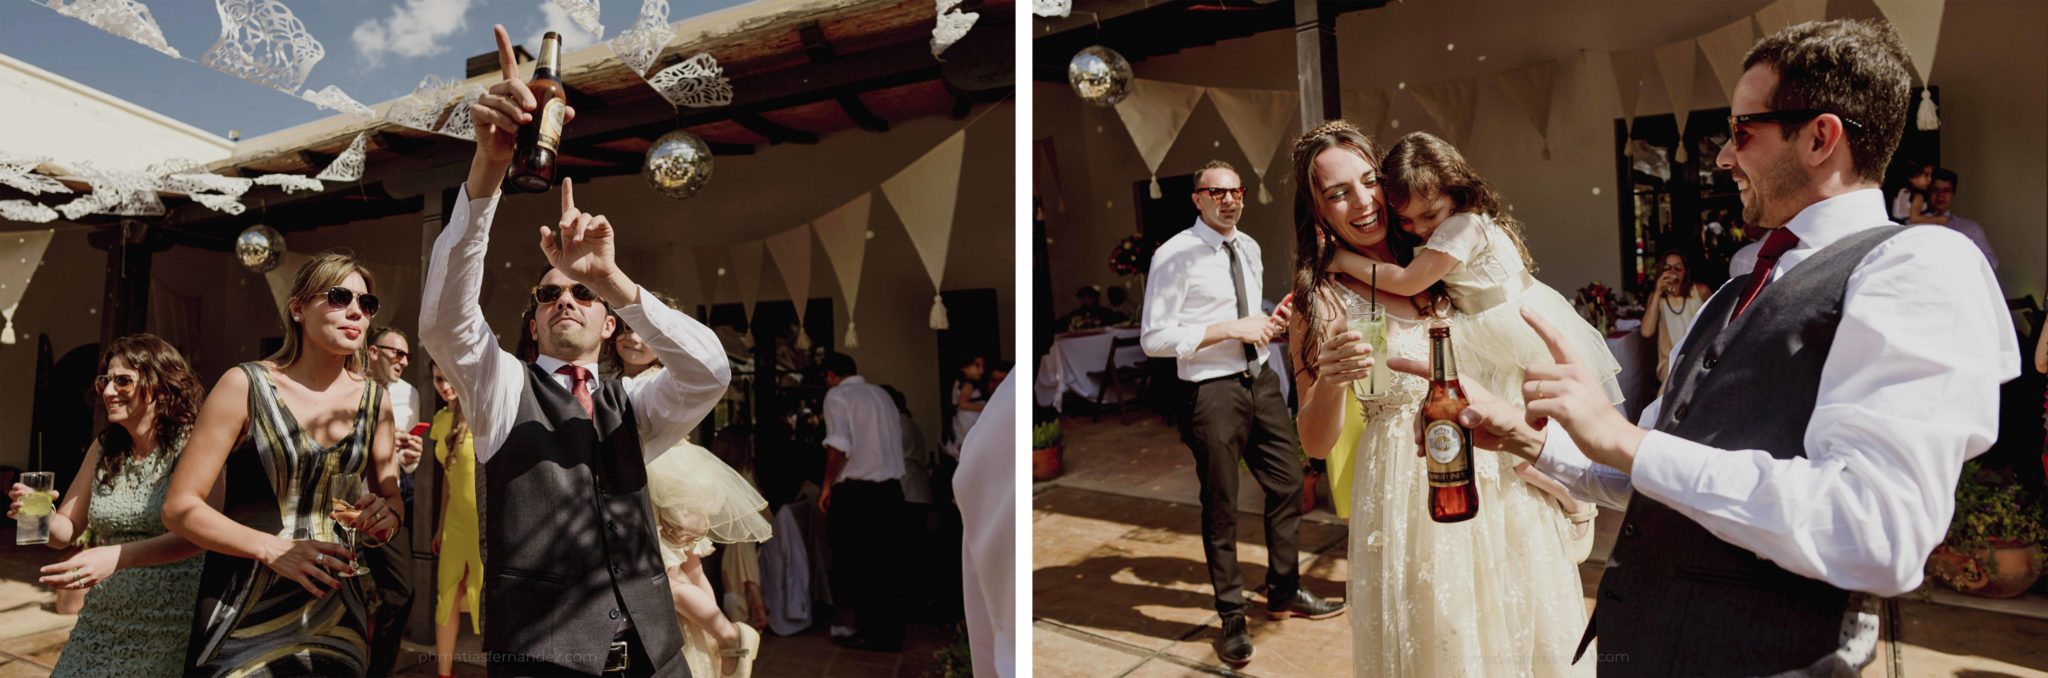 Vir & Tincho - boda en purmamarca - phmatiasfernandez - matias fernandez